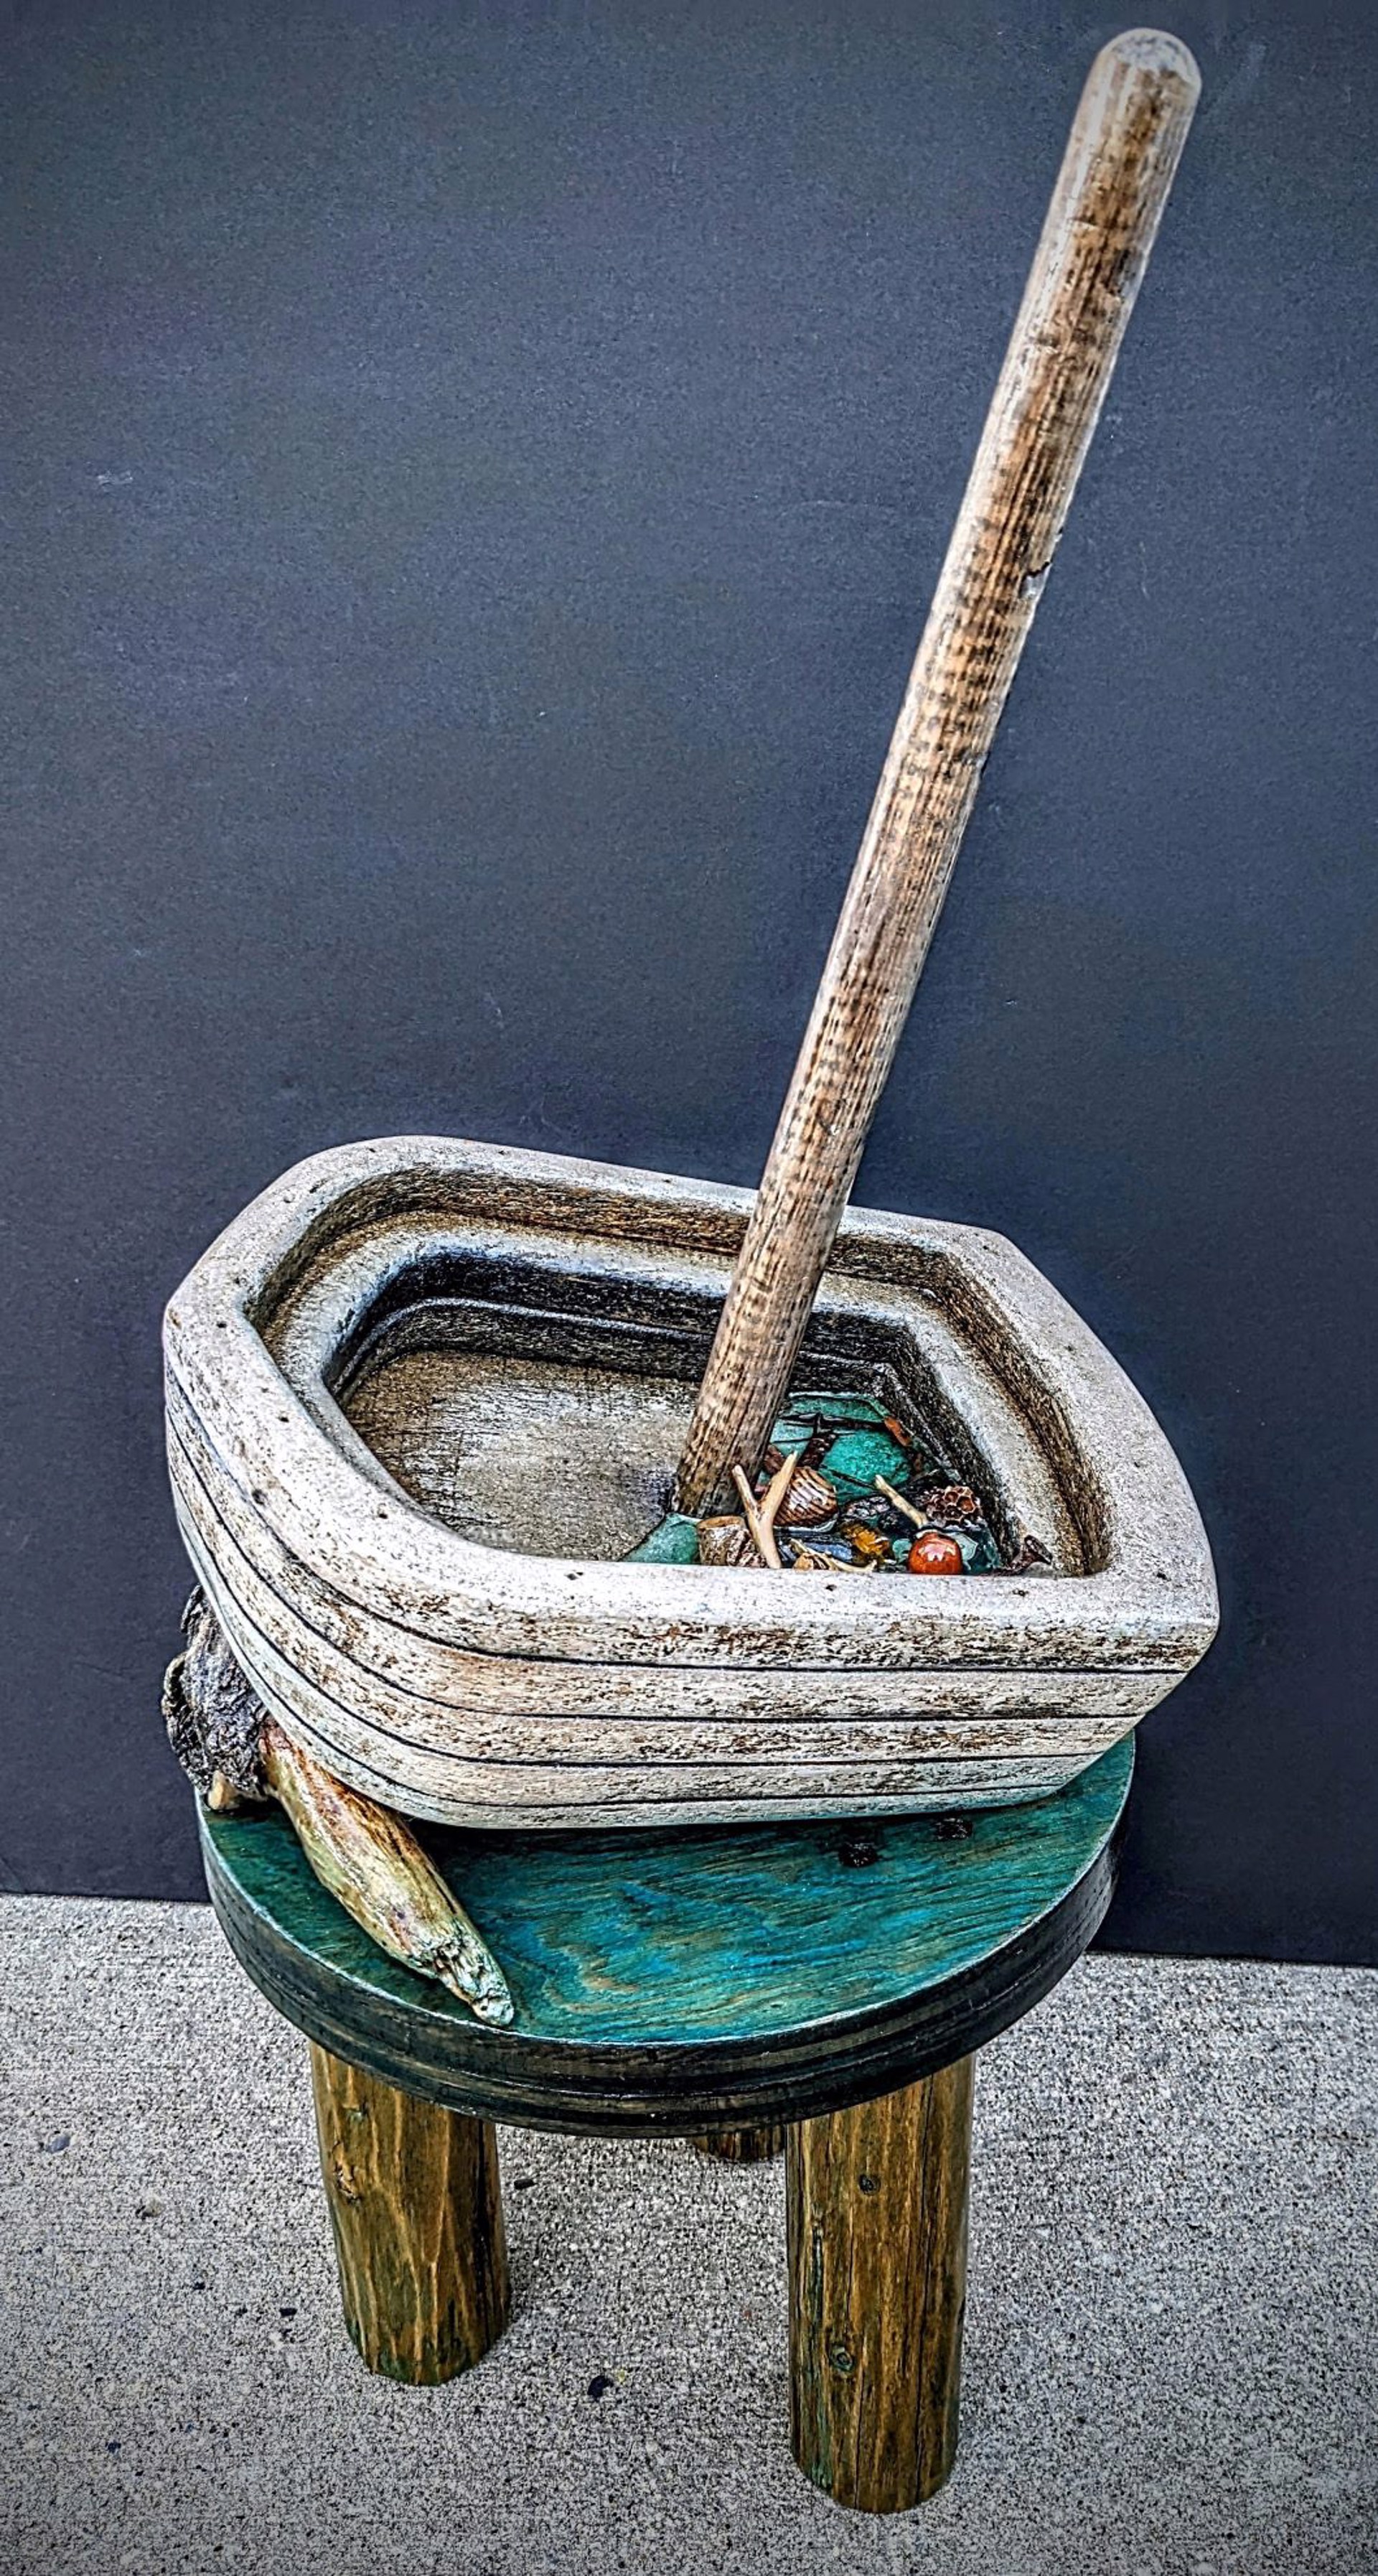 Little Boat Wreck Sculpture by Dean Habegger